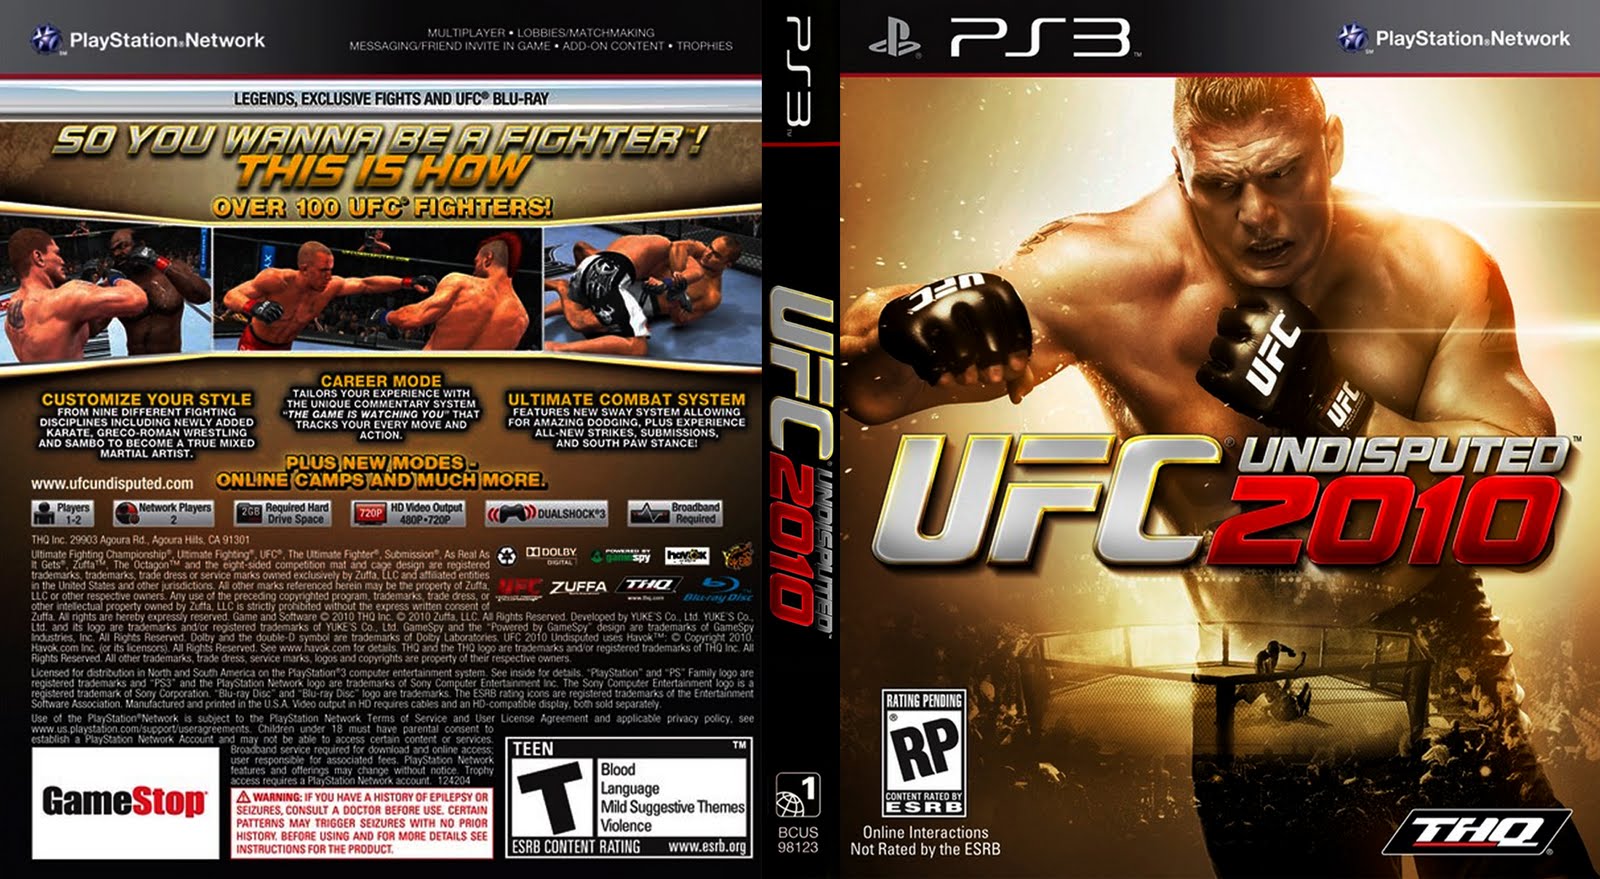 Ps3 2010. Юфс УНДИСПУТЕД 2010. Ps3 UFC 2010 русская версия диск. UFC Undisputed 2010 ps3. Ps3 "UFC Undisputed 2010" (2010).